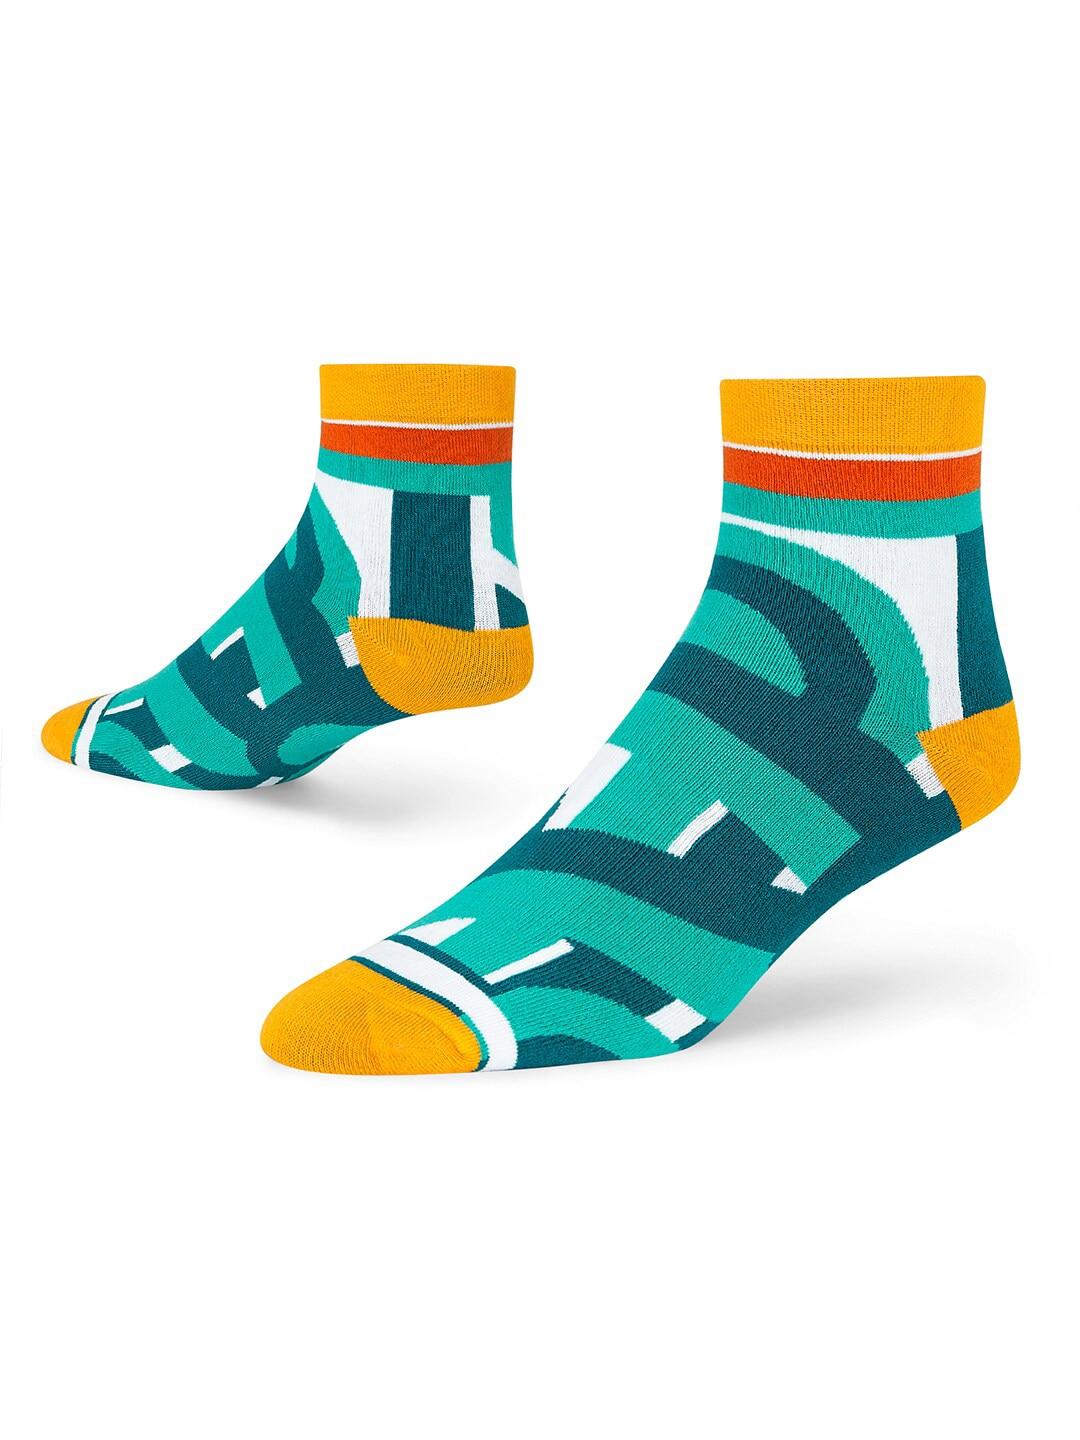 dynamocks patterned ankle length socks